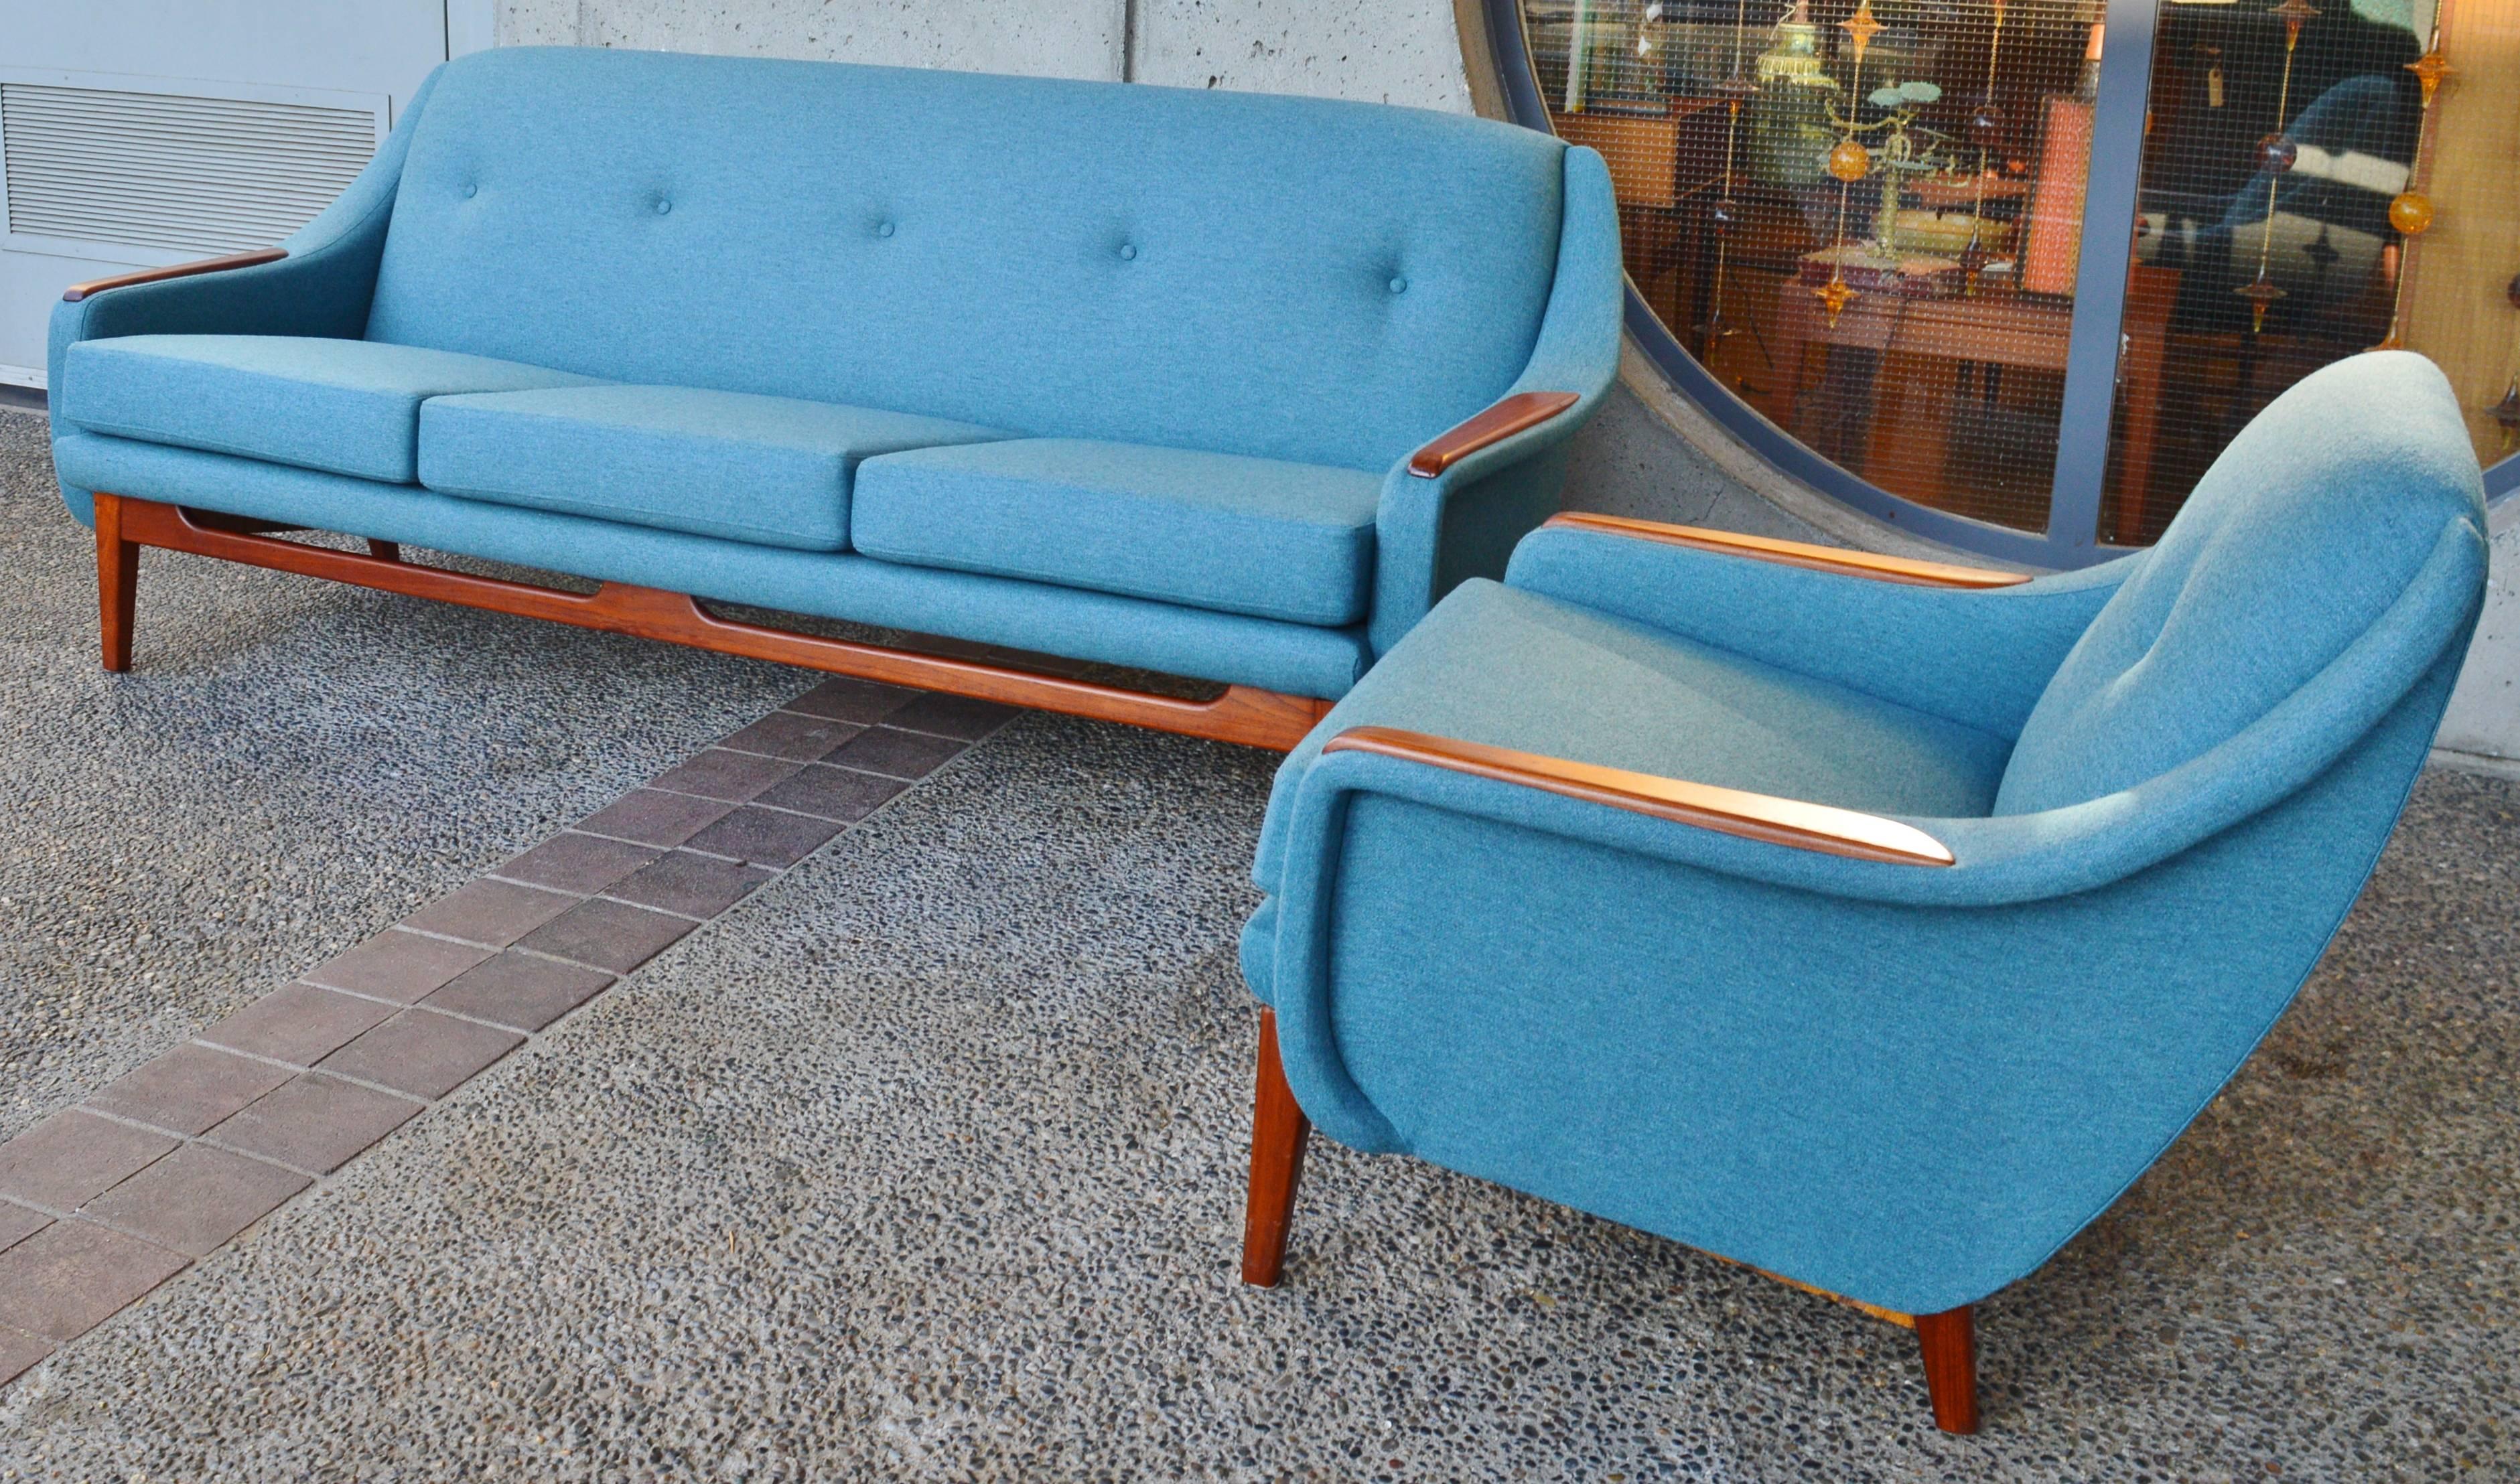 Mid-20th Century Scandinavian Teak Sofa and Lounge Chair in Blue Wool